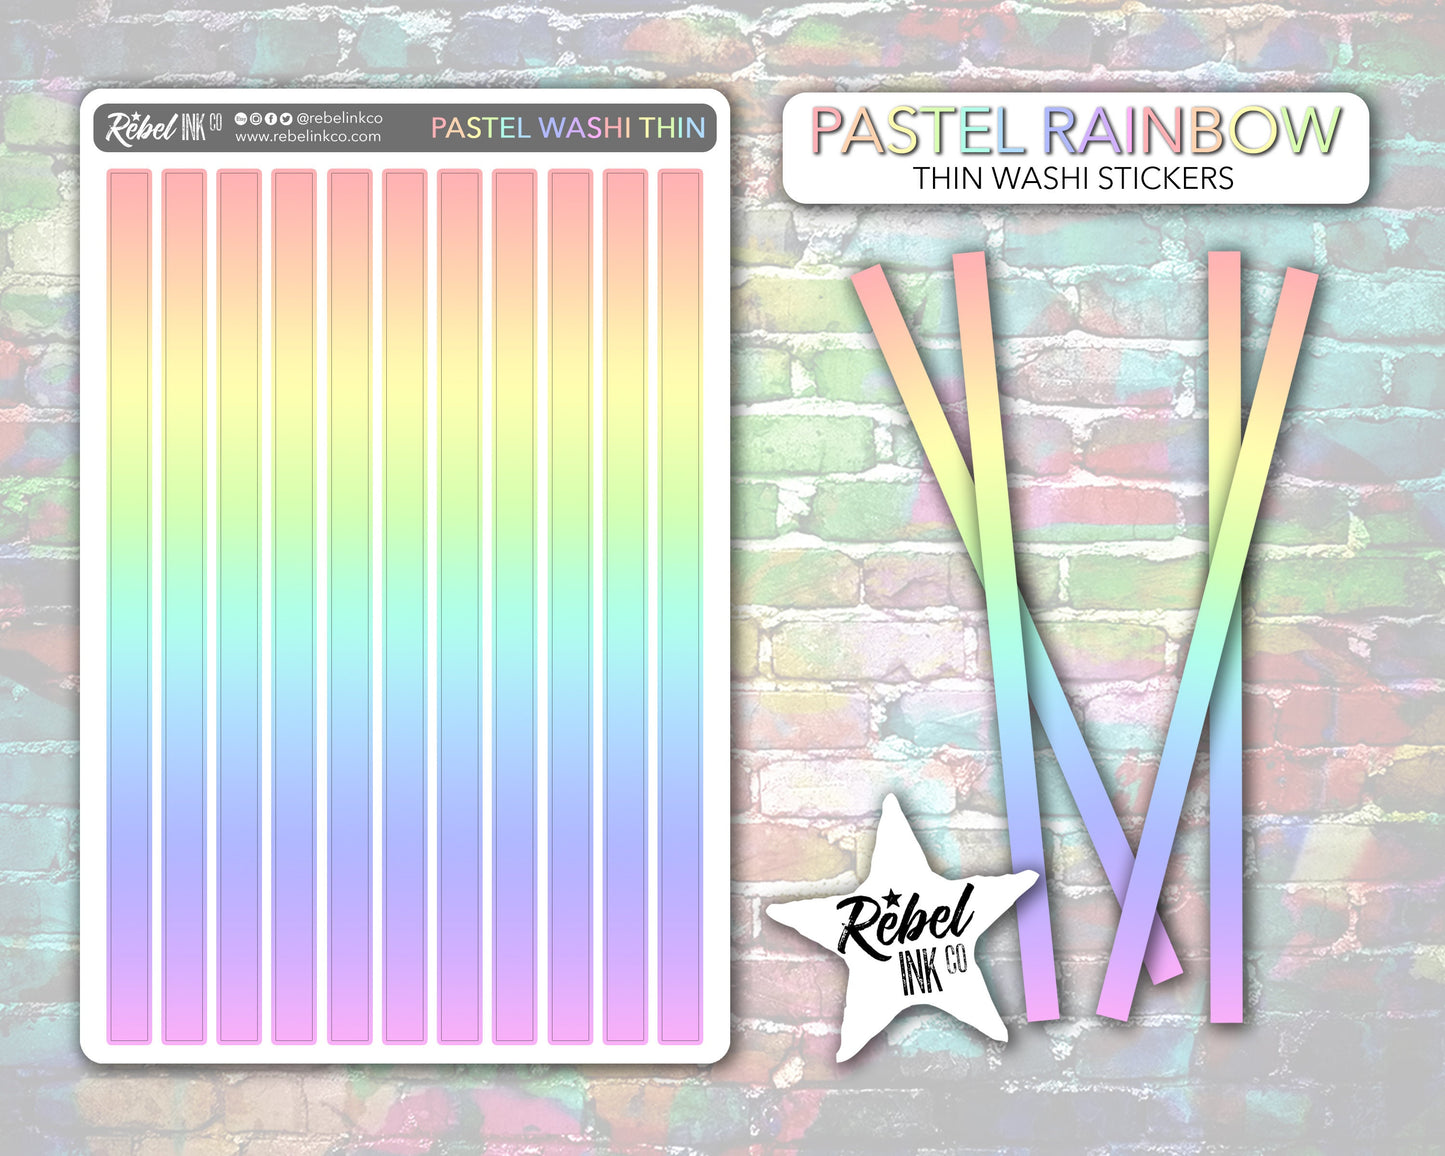 Rainbow Thin Washi Stickers - Pastel Rainbow